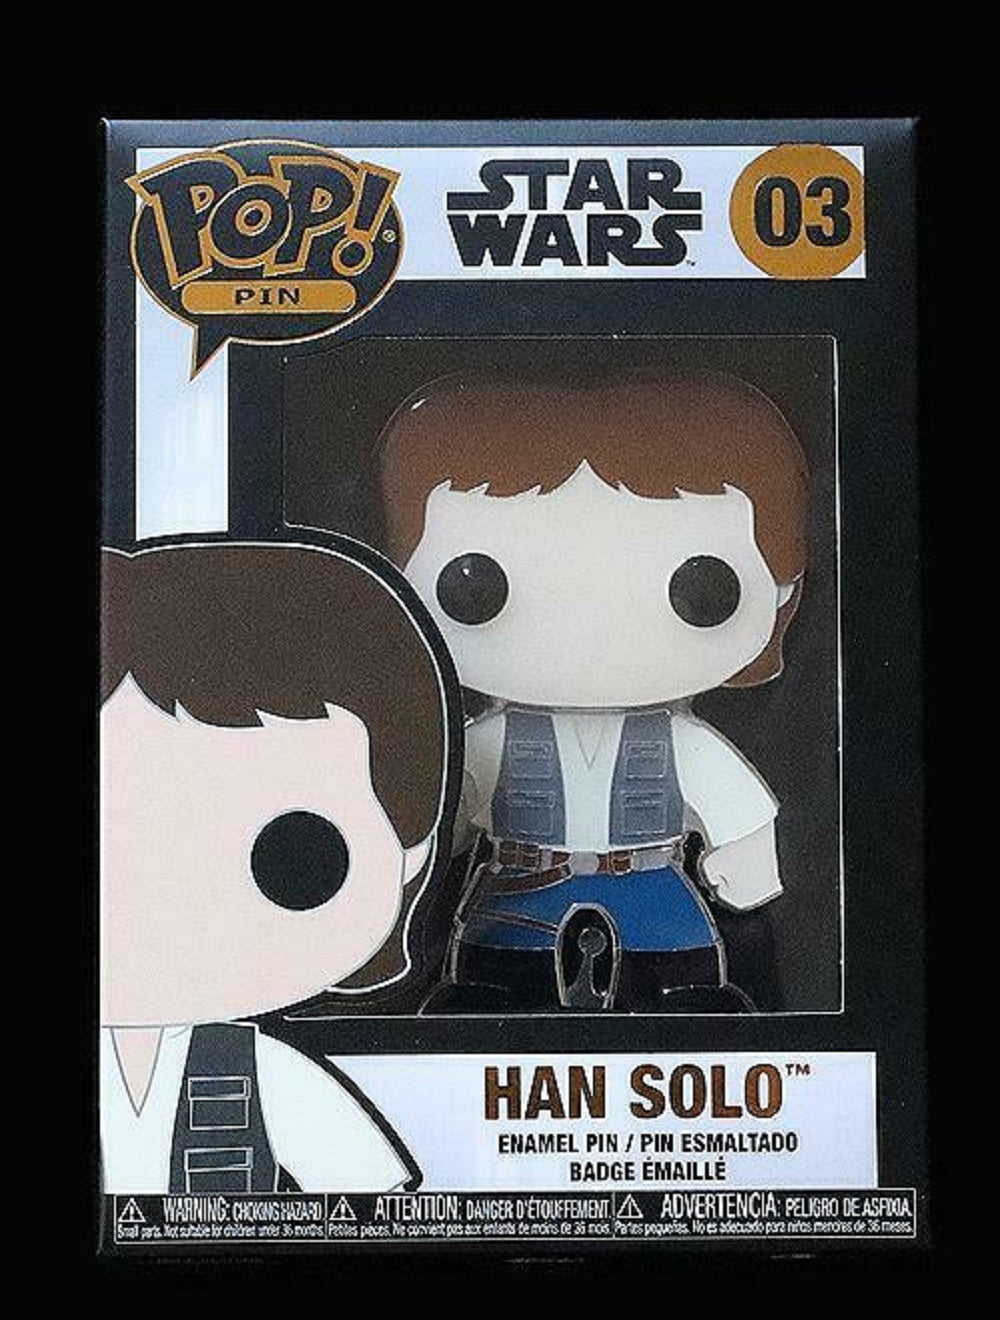 Funko Pop! Pin Star Wars Han Solo 4" Pin